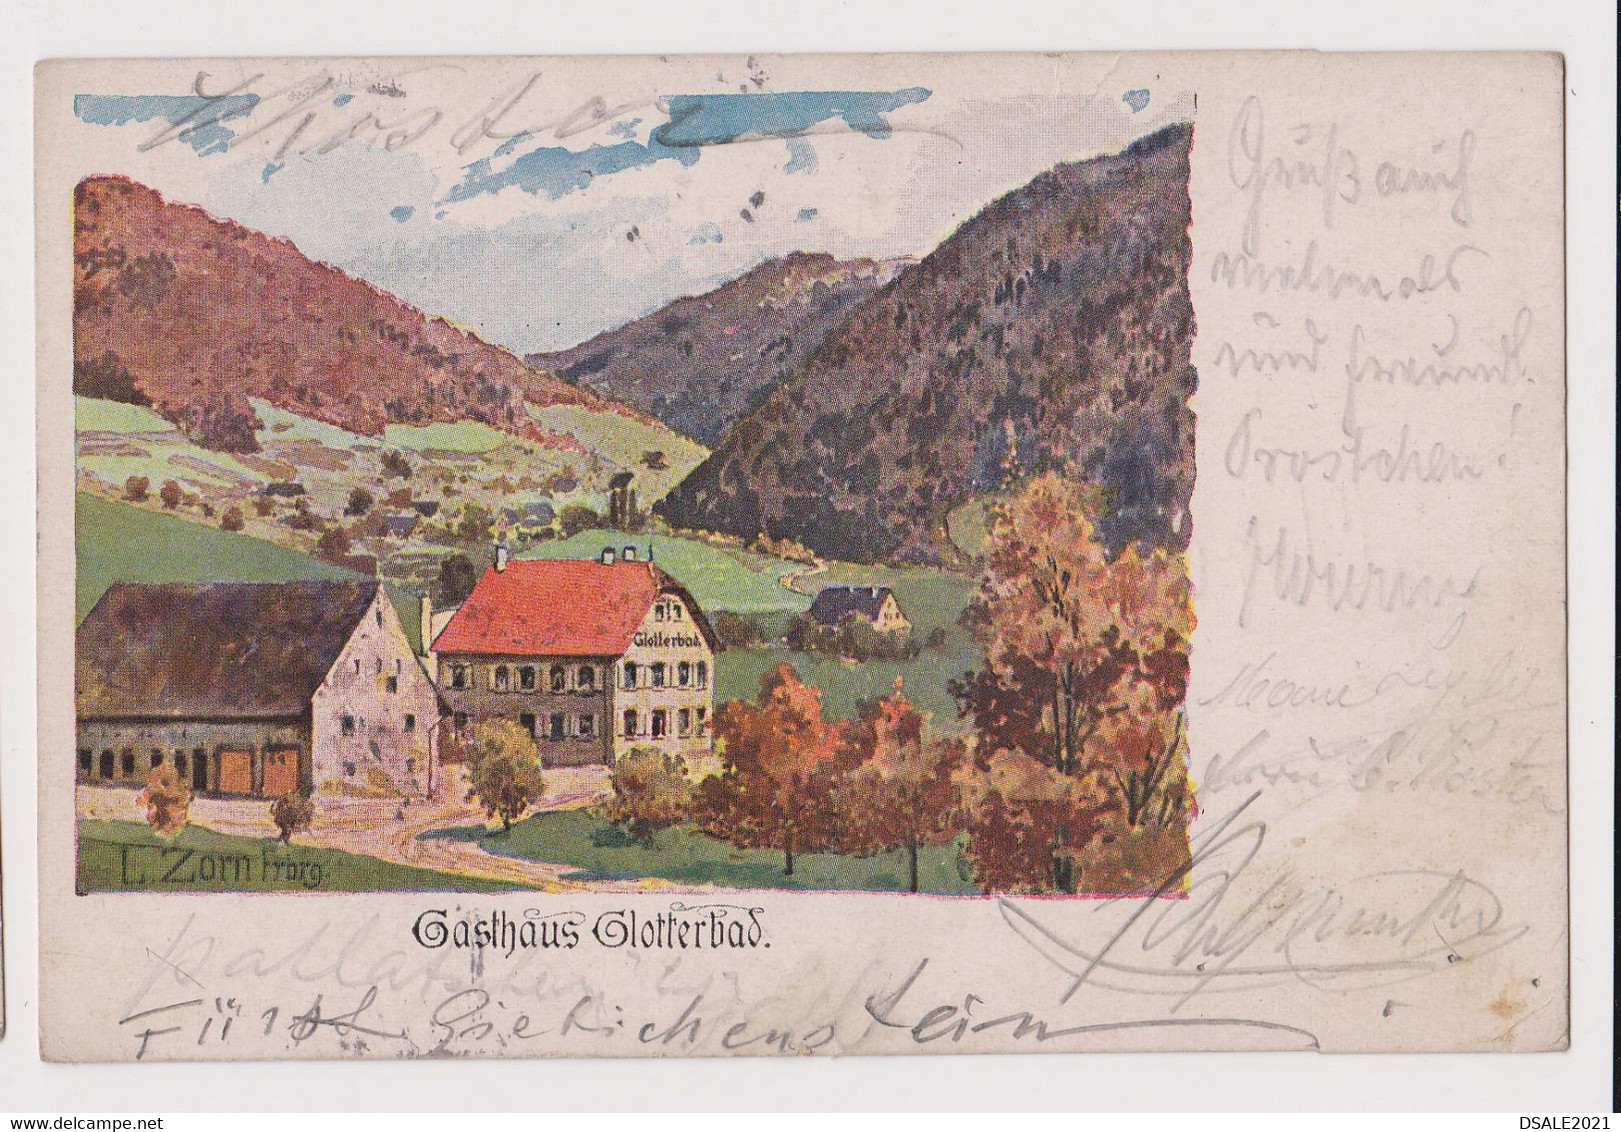 Baden-Württemberg Germany Gasthaus Glotterbad-Glottertal Circa 1900 Litho Postcard (41148) - Glottertal